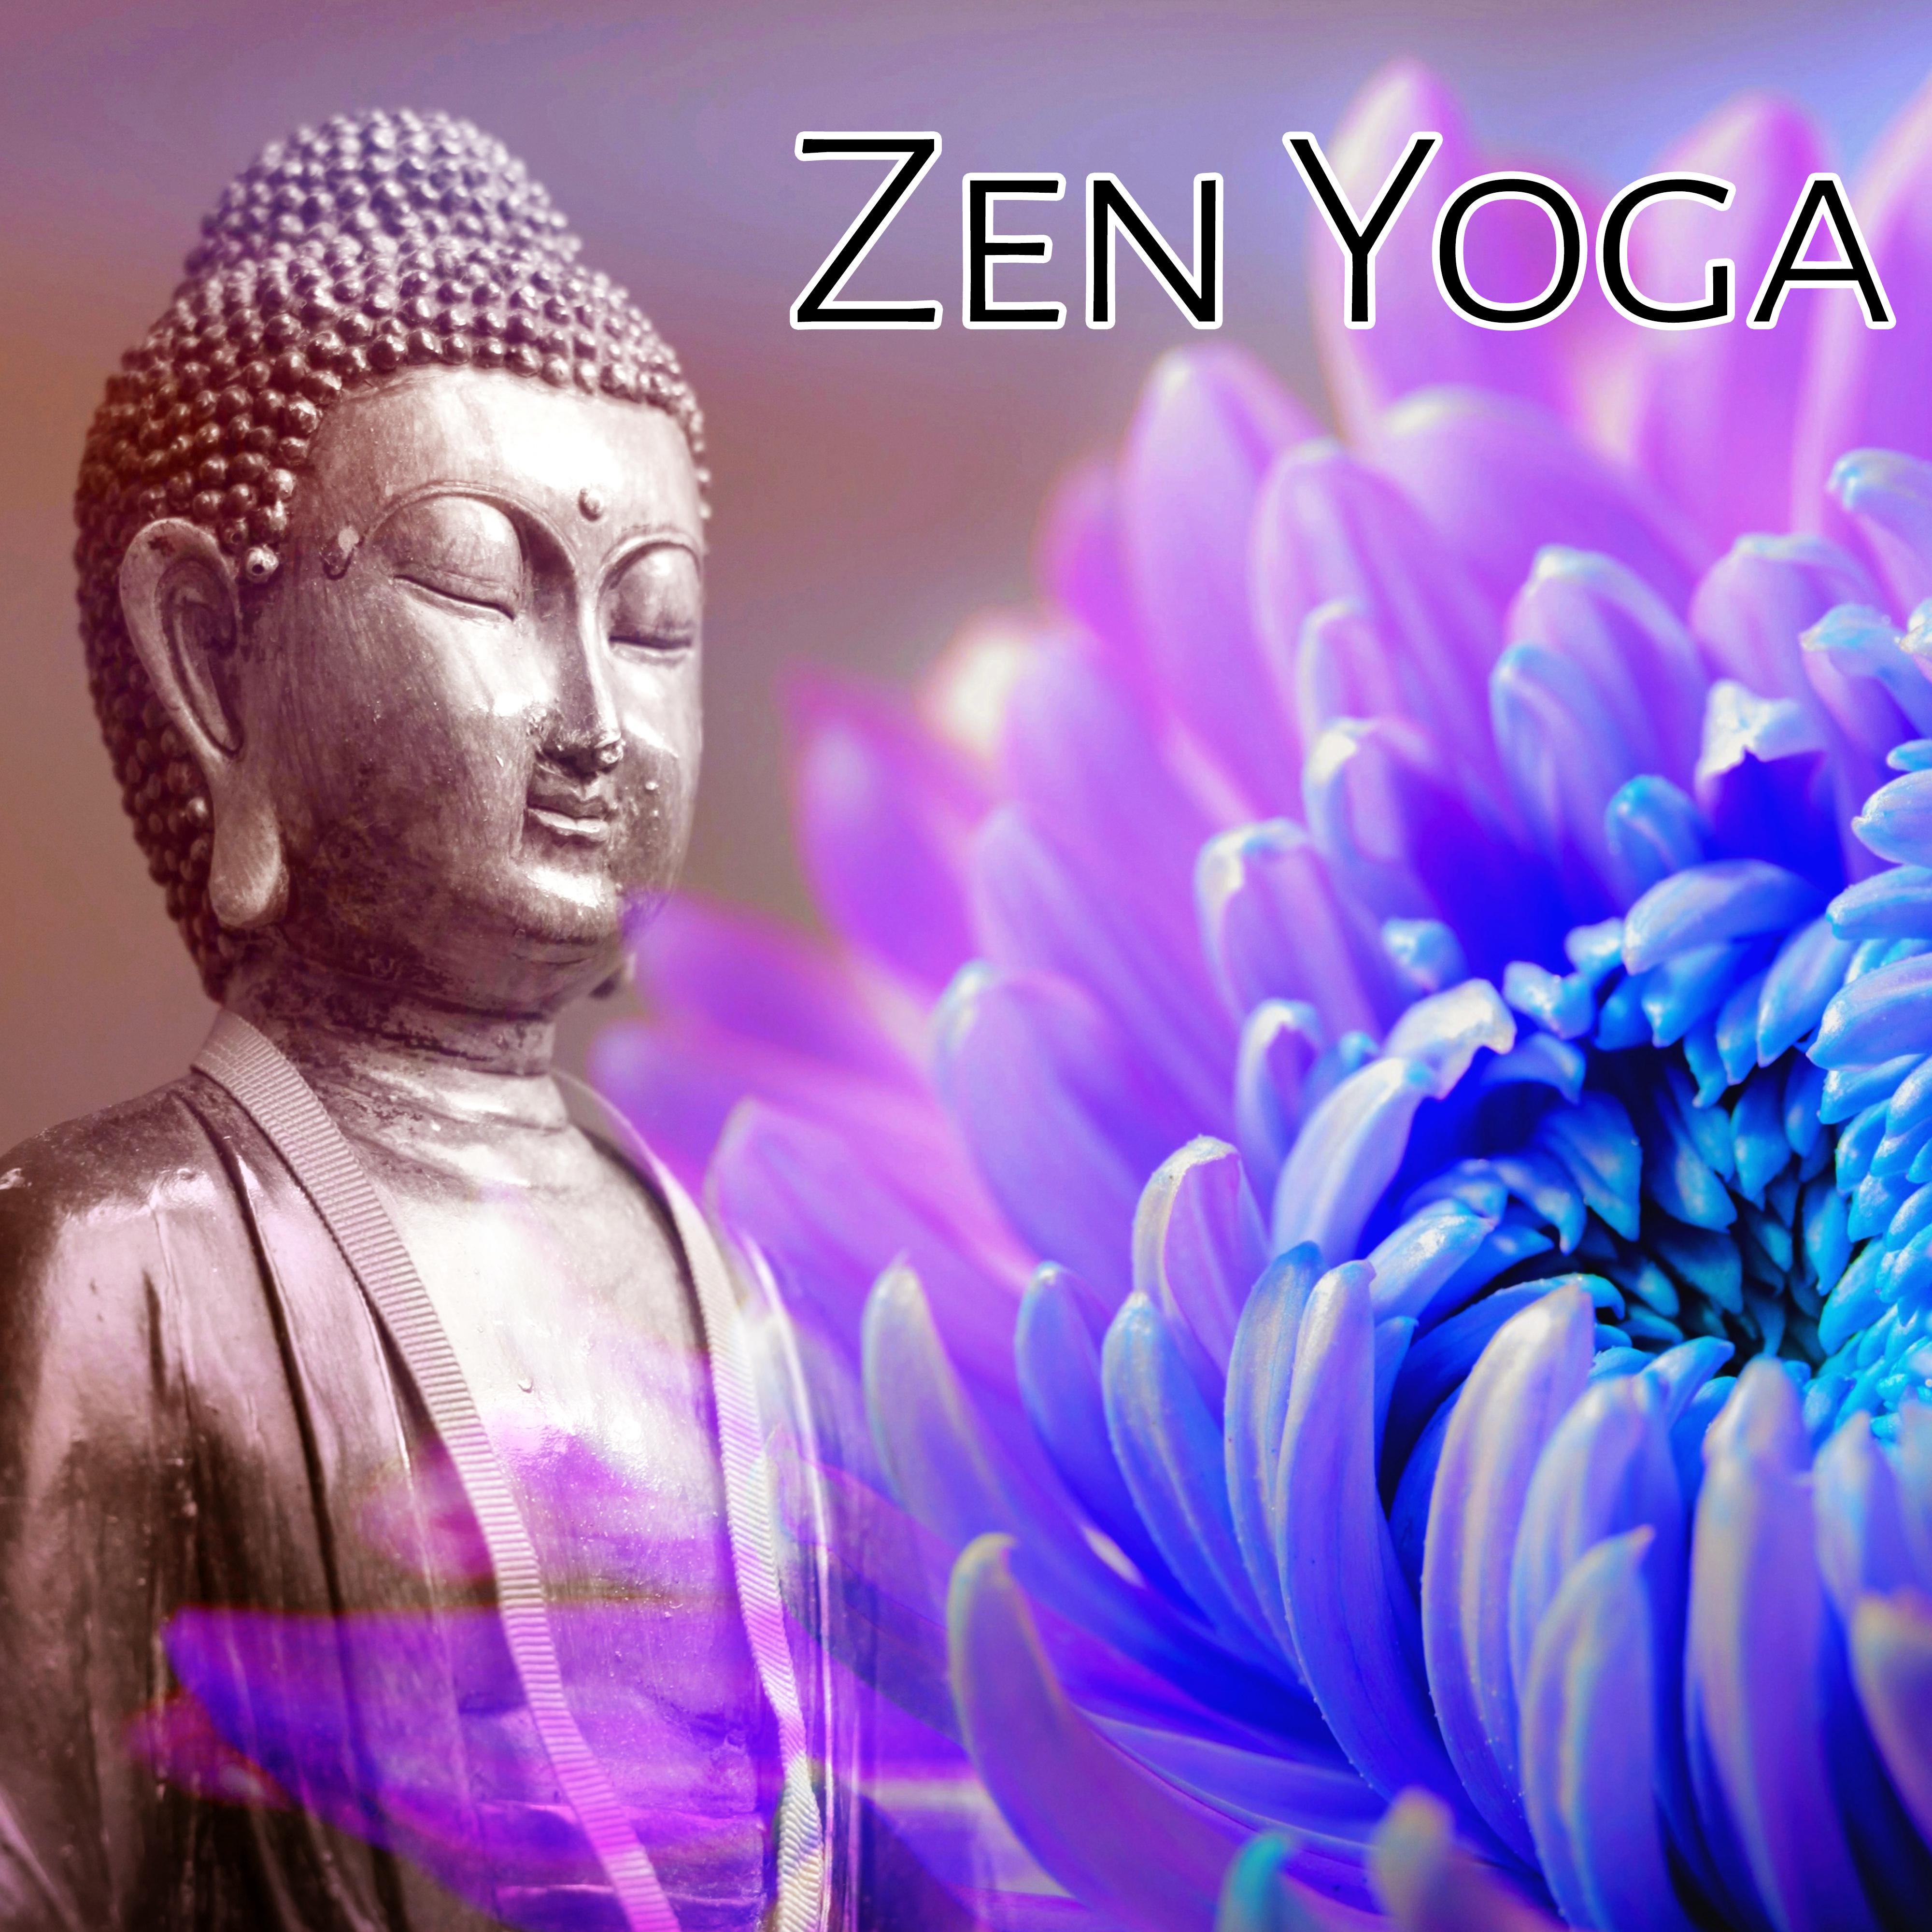 Zen Yoga - Reiki Healing Music, Zen Garden, Relaxation, Buddha Meditation, Tranquility, Destress, Peaceful Music for Mind Body and Harmony